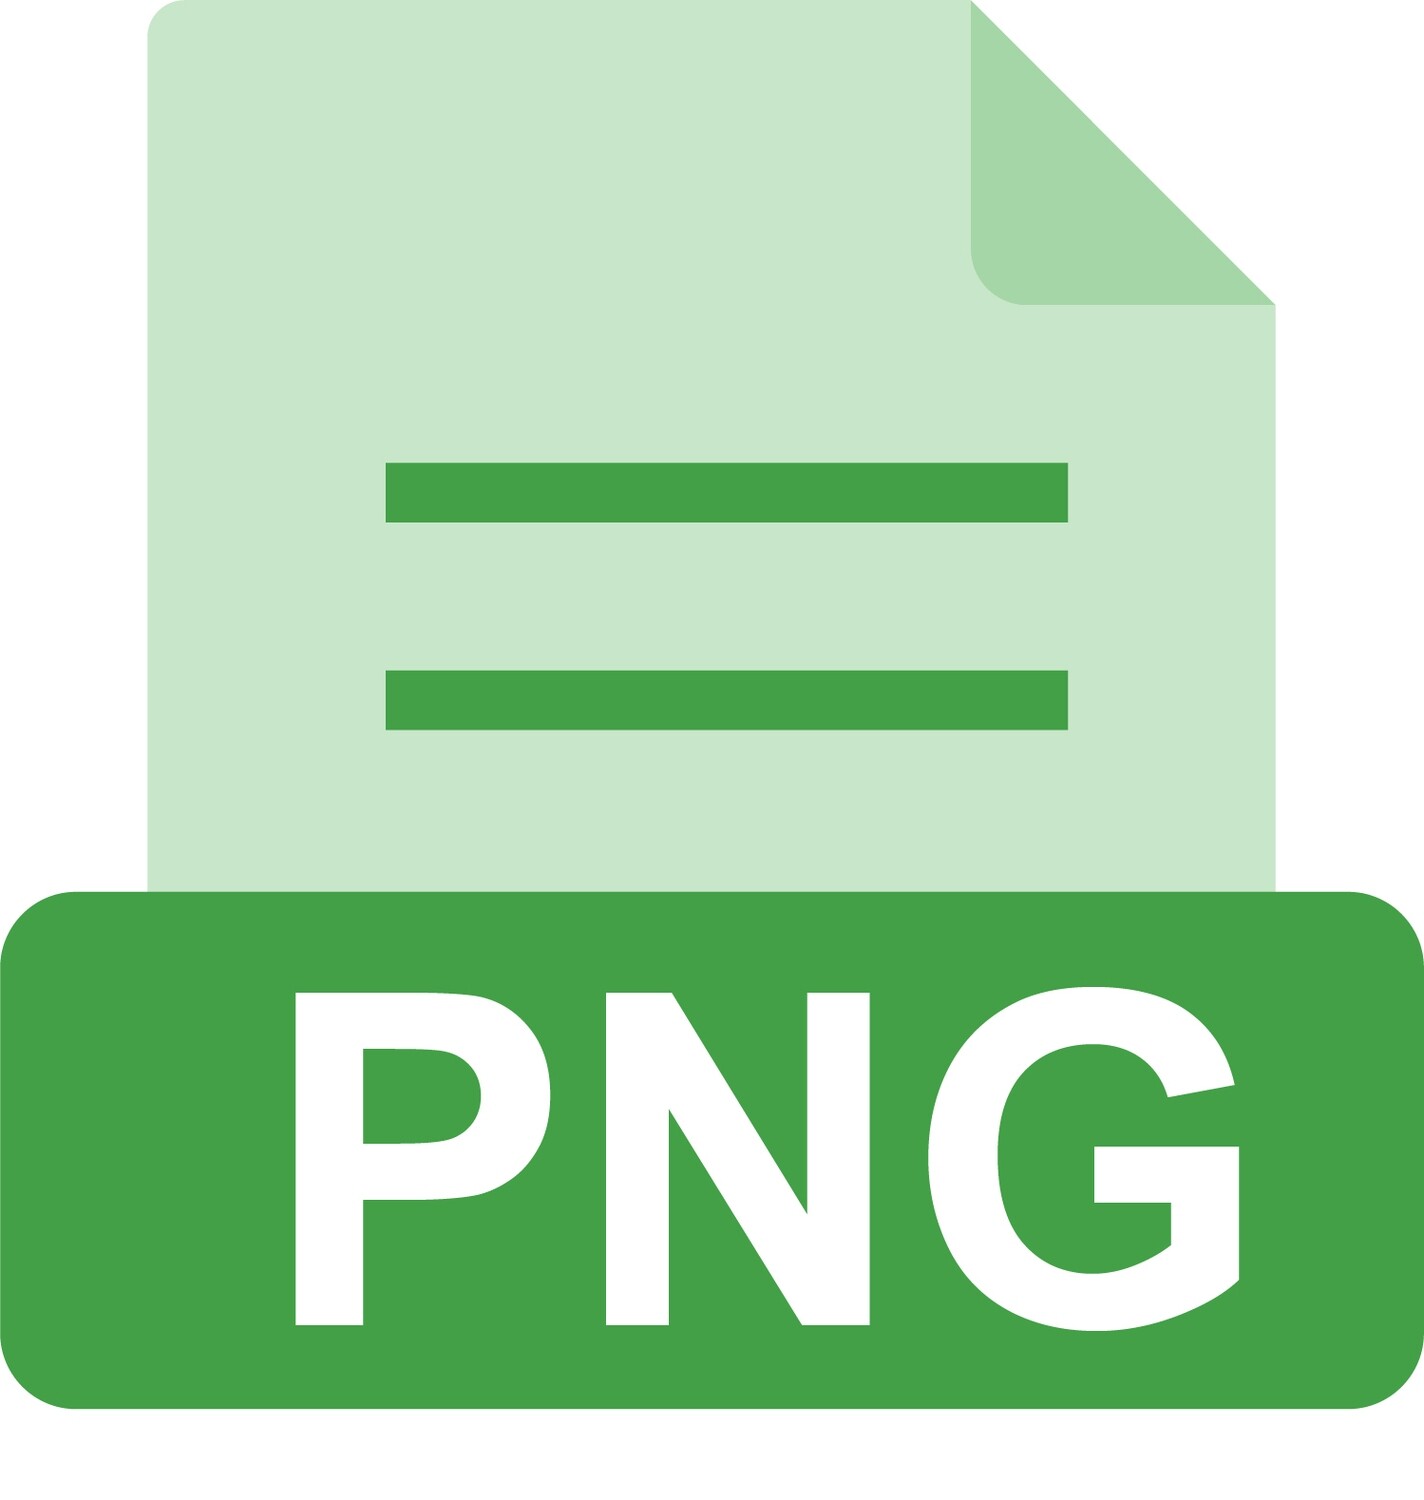 E-File: PNG, PE Nebraska